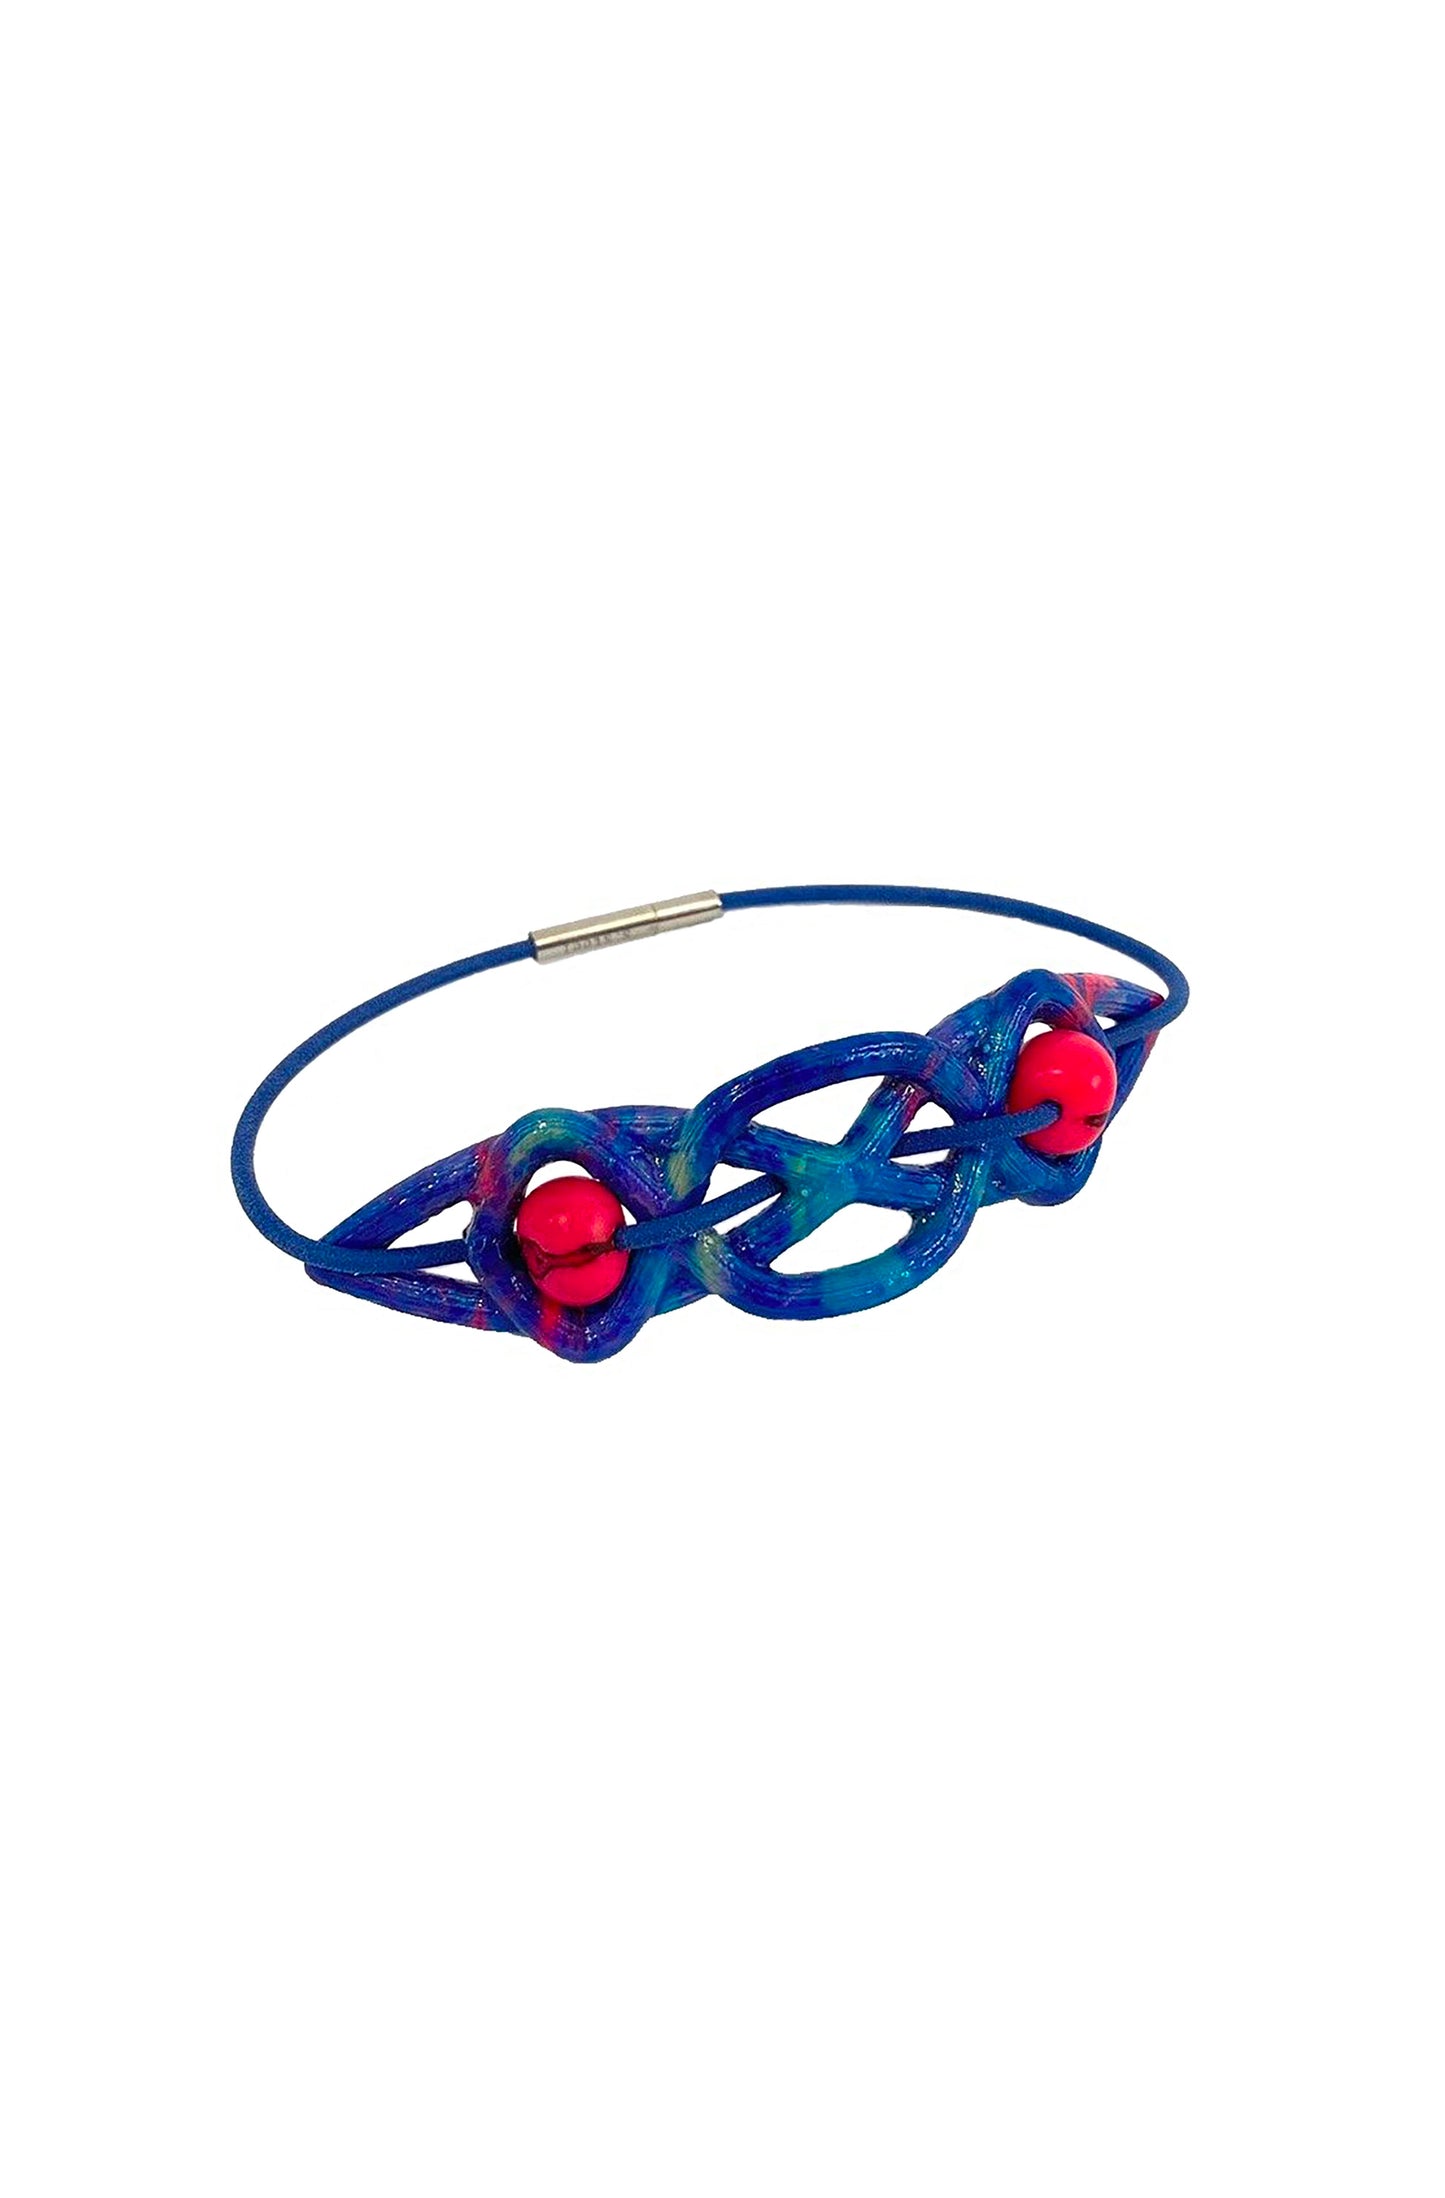 Bracelet OY3D Blue Acaï